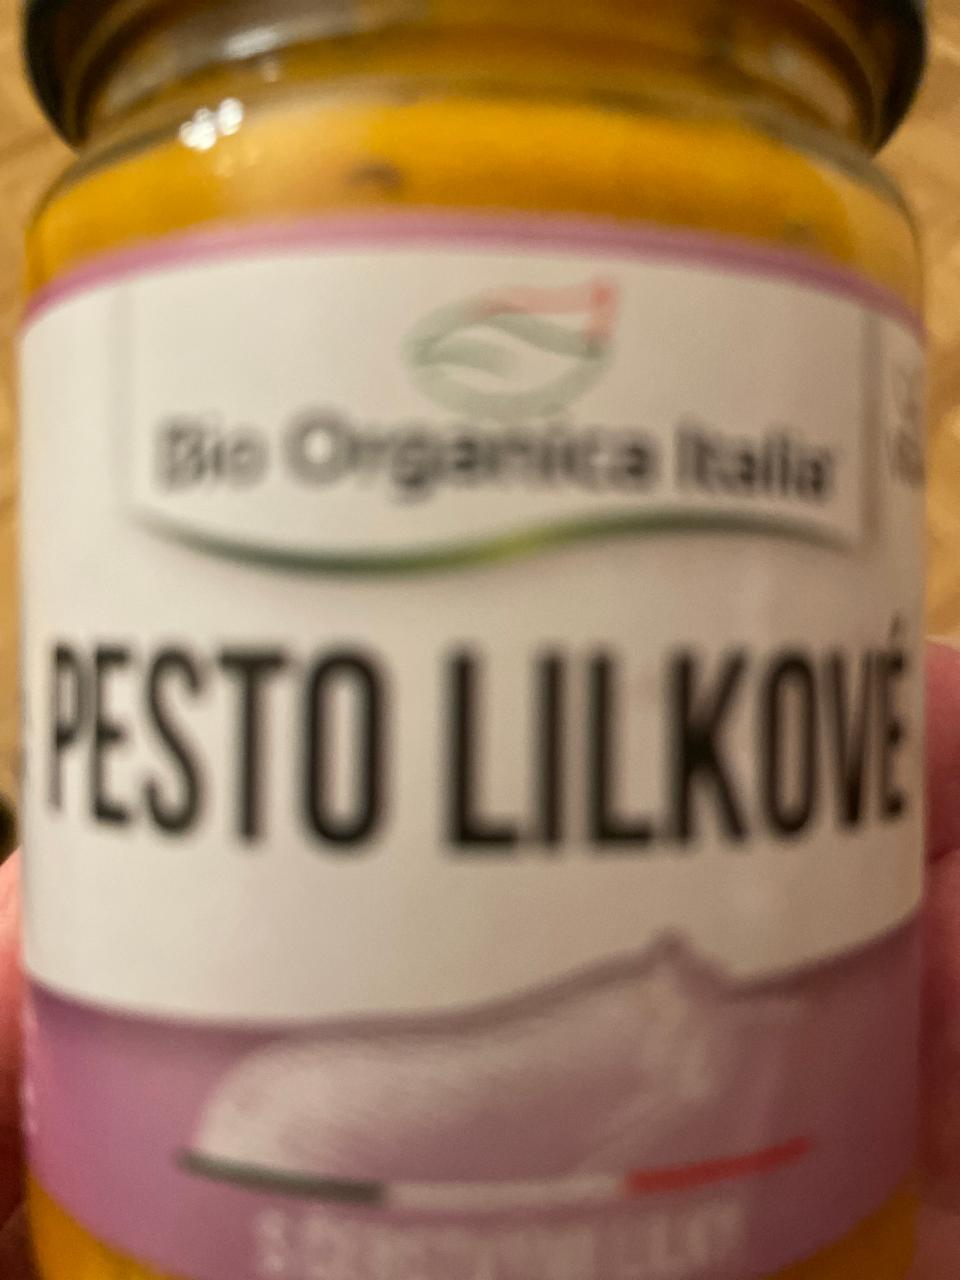 Fotografie - Pesto lilkové Bio Organica Italia